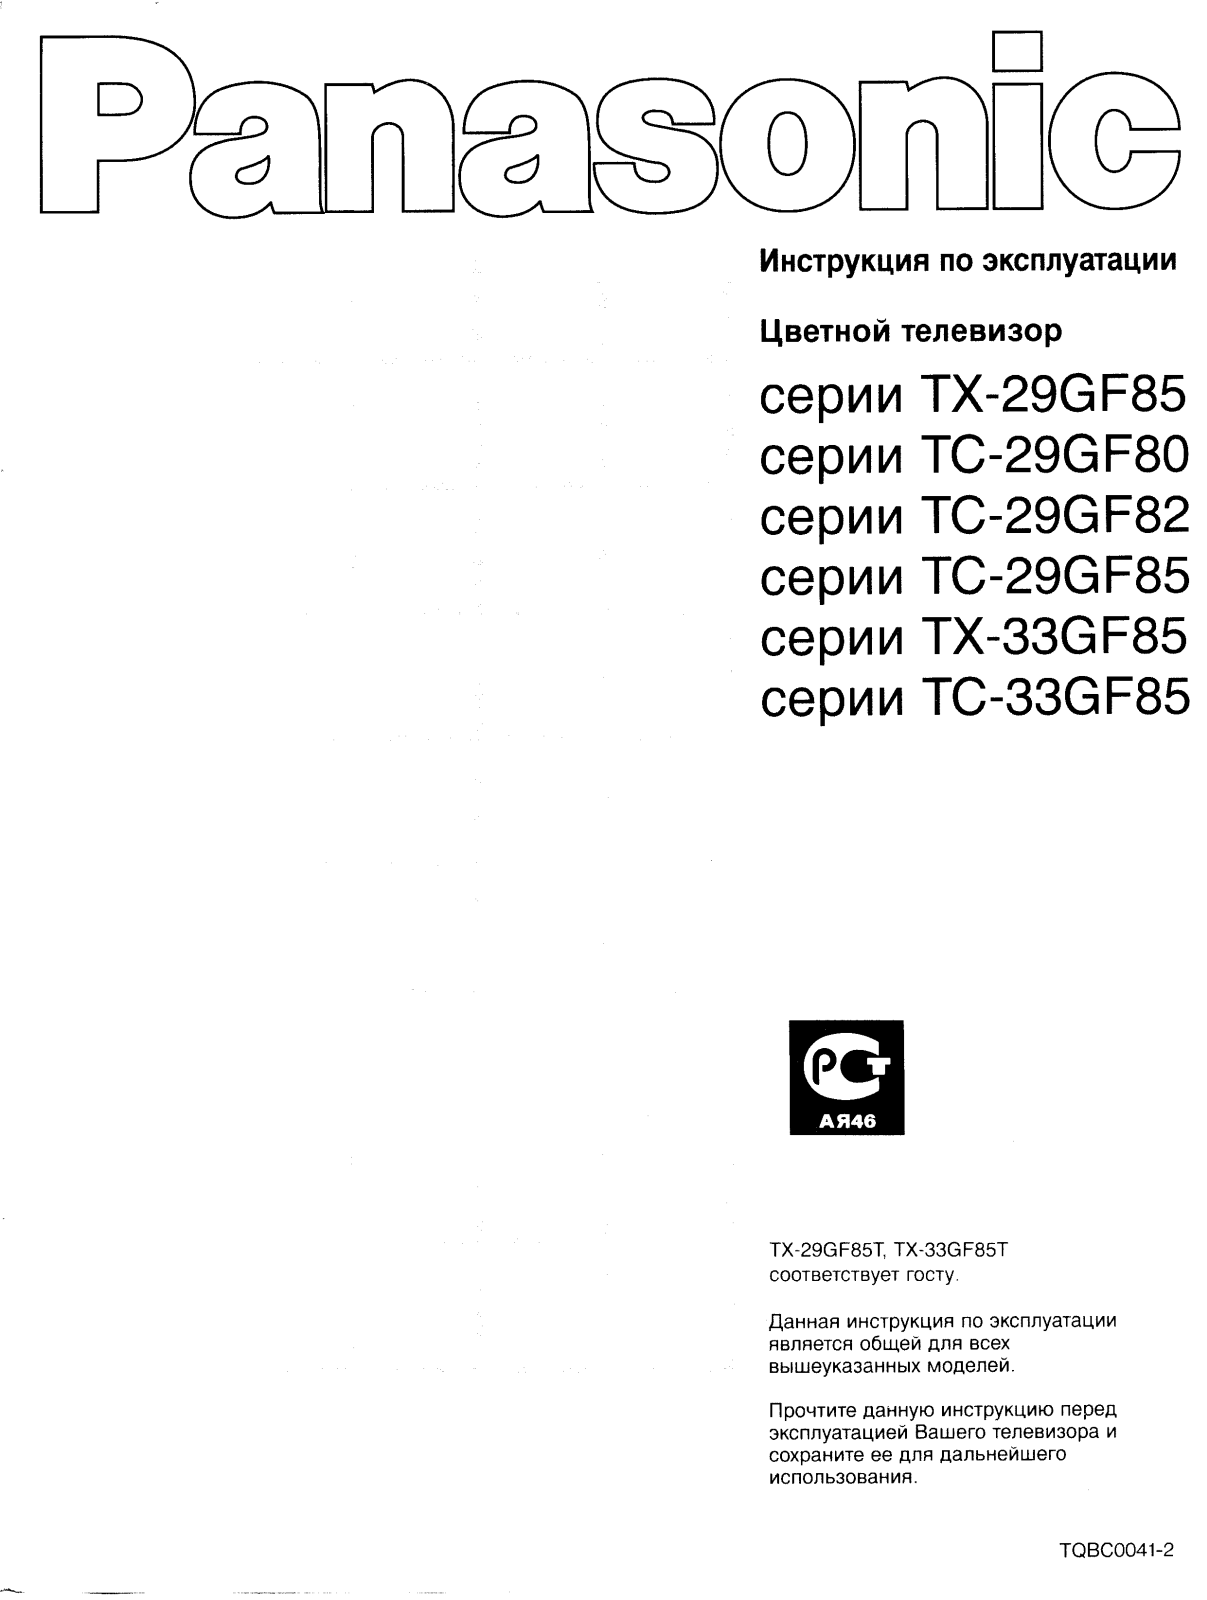 Panasonic TX-33GF85T User Manual